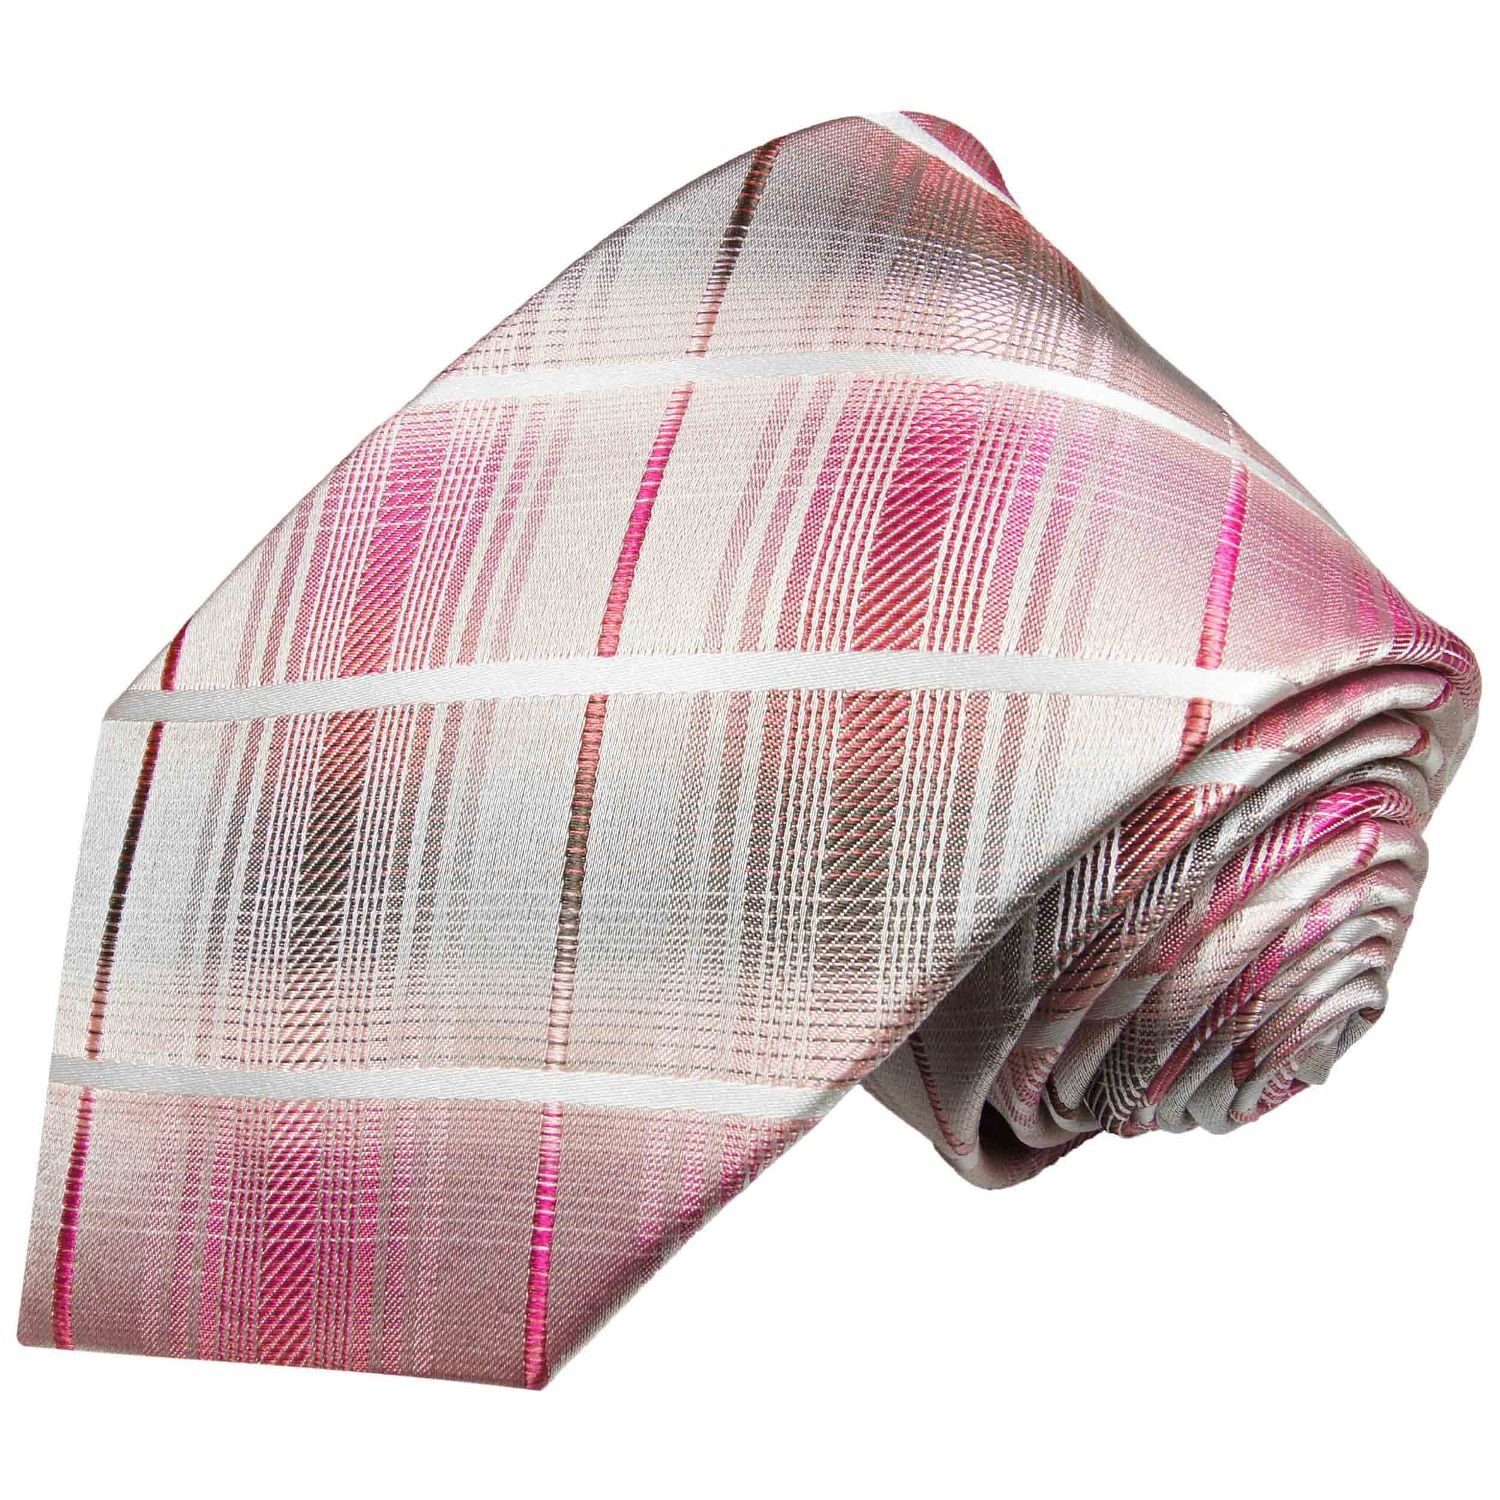 Paul Malone Krawatte Designer Seidenkrawatte Herren Schlips modern gestreift 100% Seide Breit (8cm), Extra lang (165cm), pink grau 2020